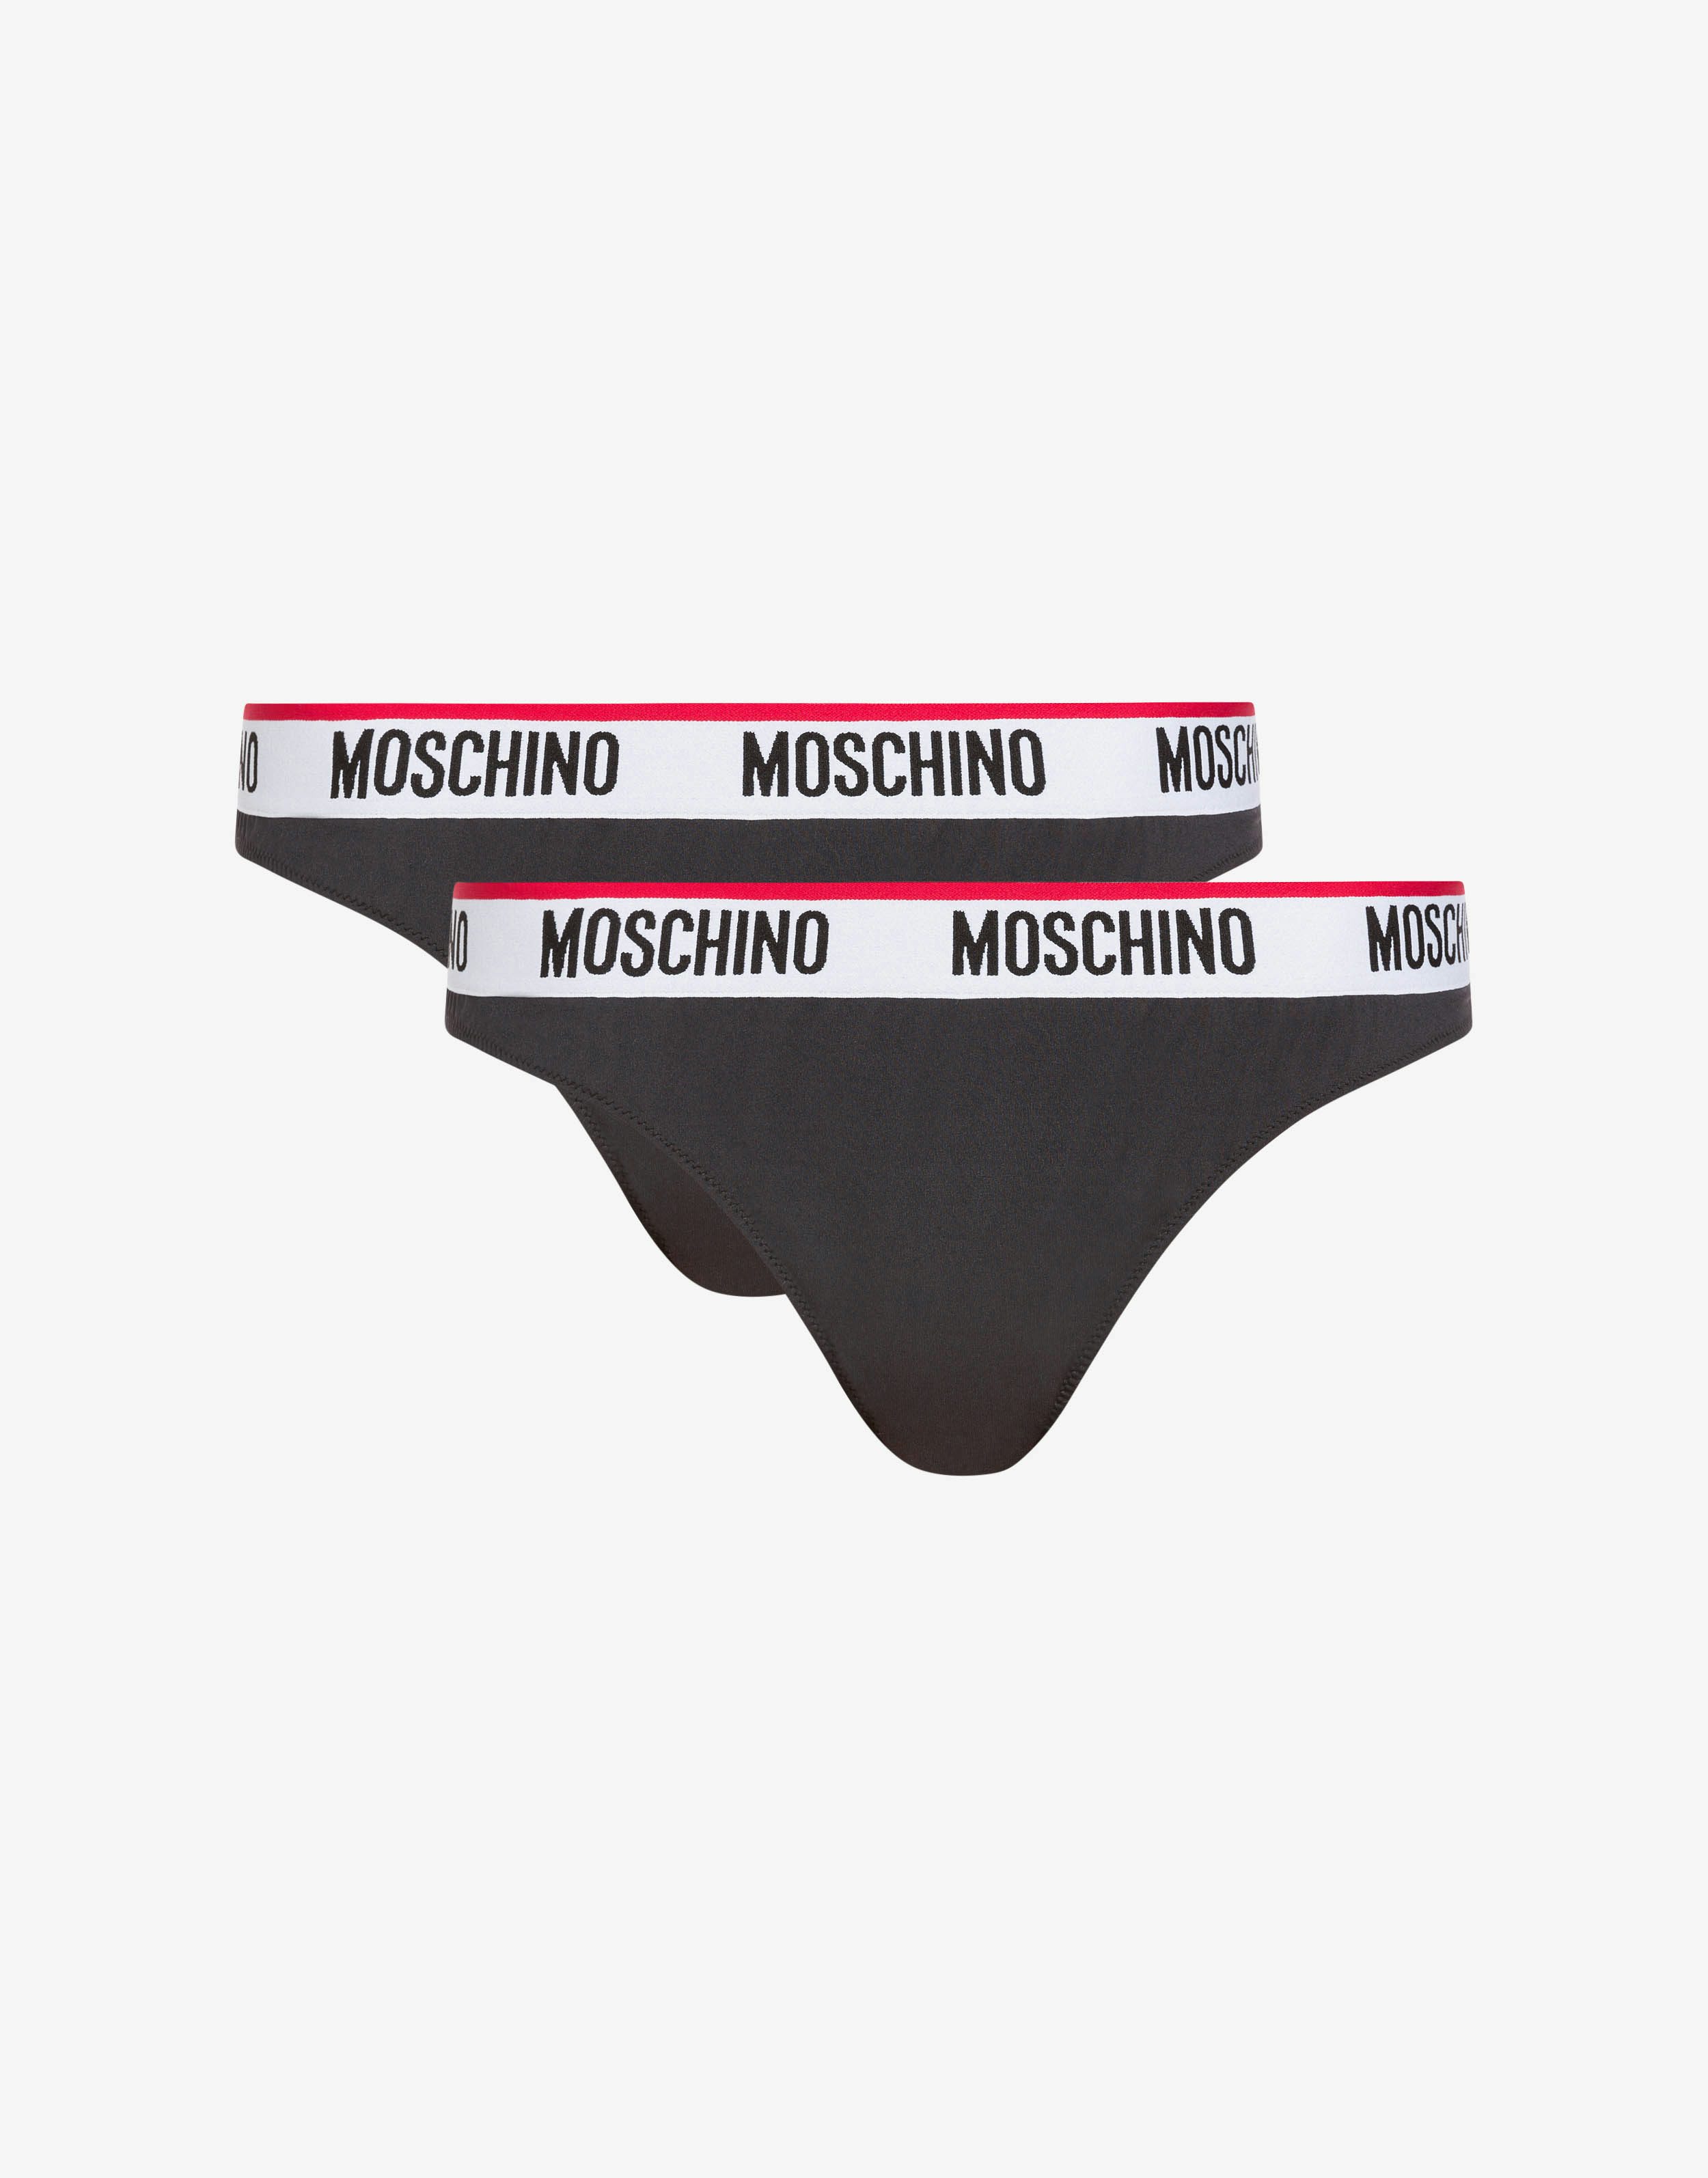 Moschino logo-underband bra - Black, £121.00